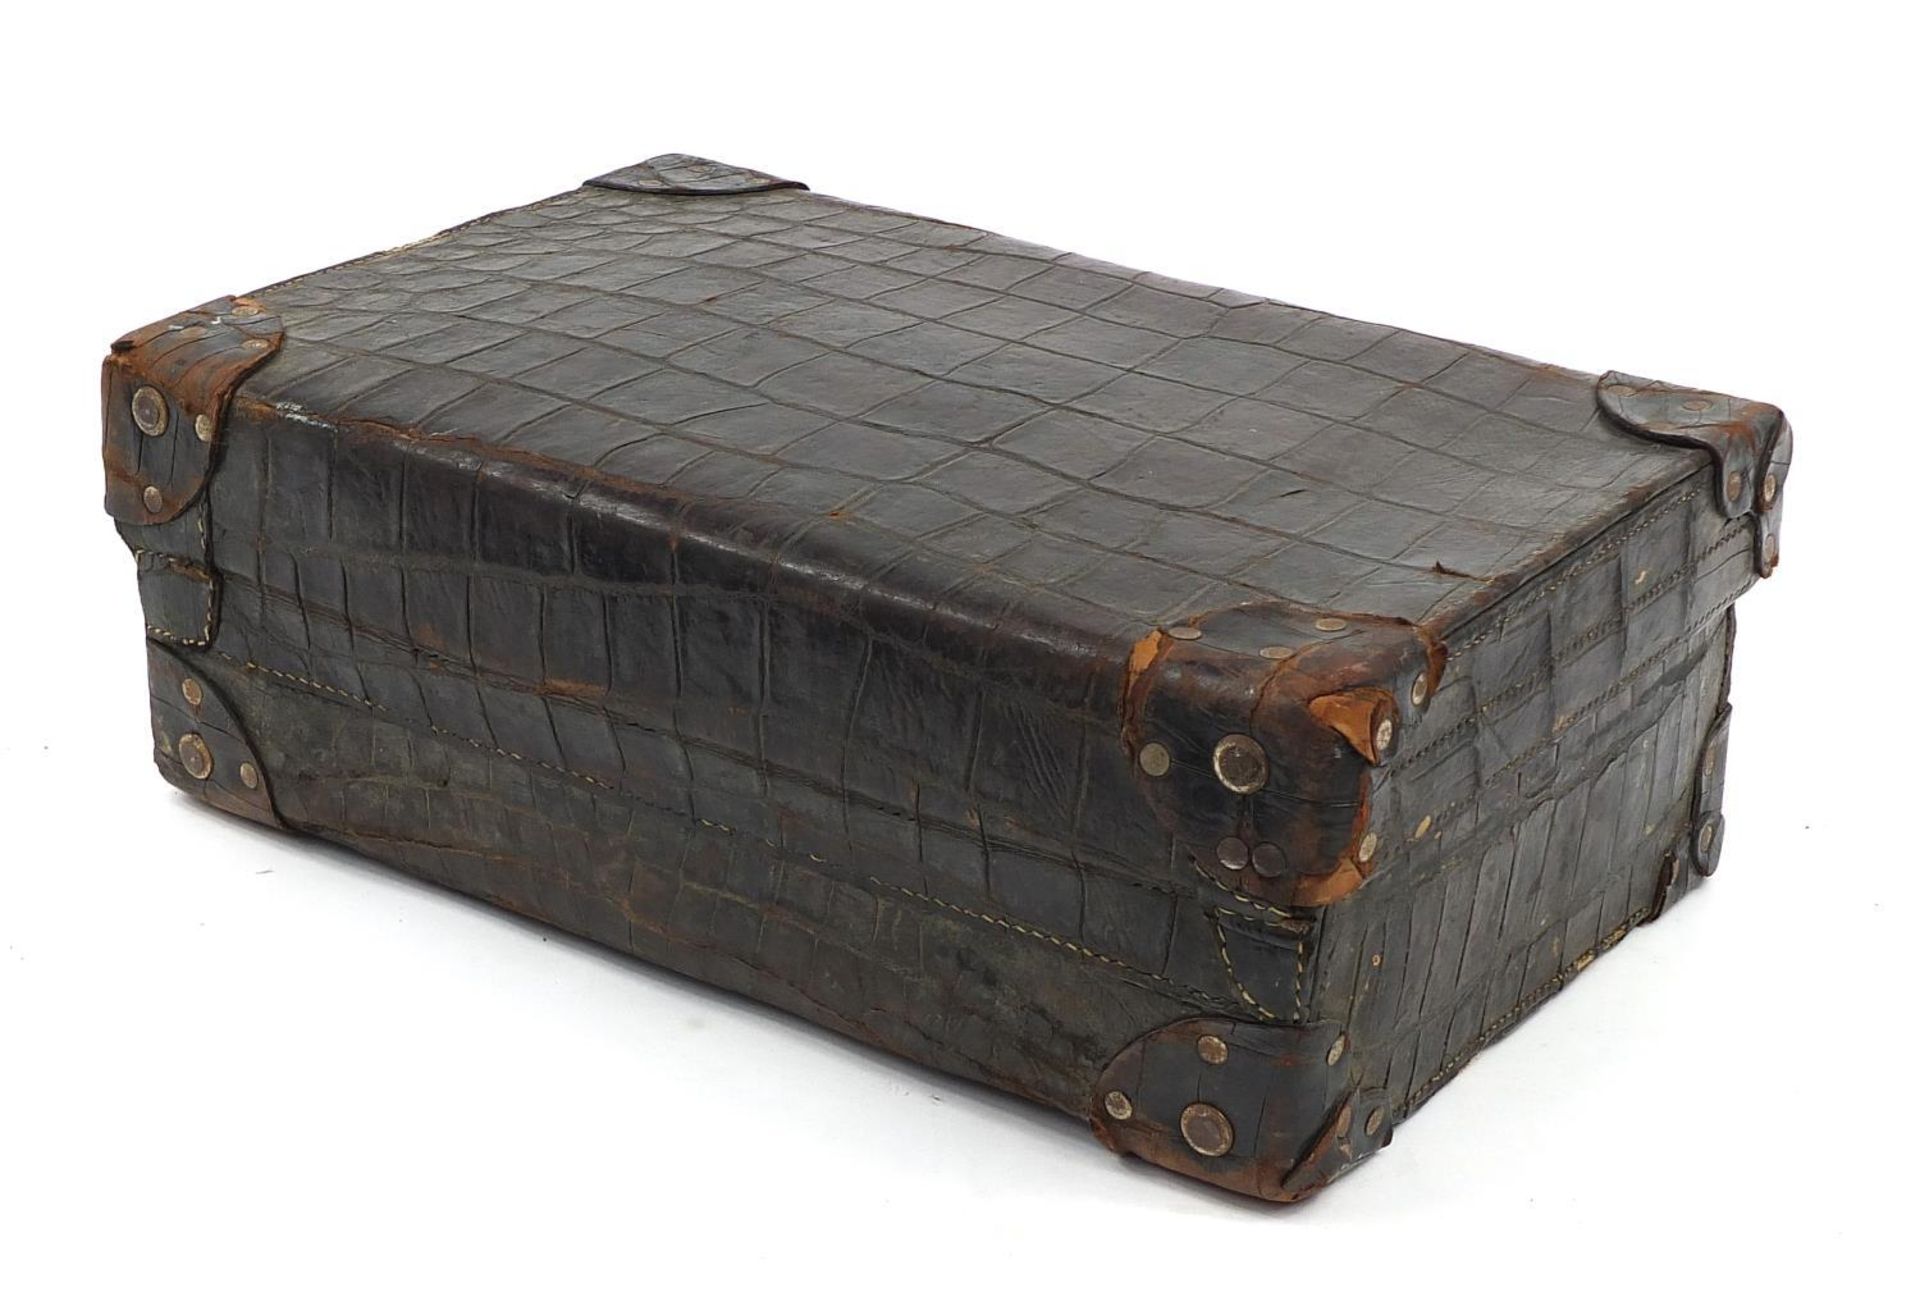 Early 20th century taxidermy interest crocodile skin suitcase, 34.5cm H x 51cm W x 17cm D - Image 6 of 6